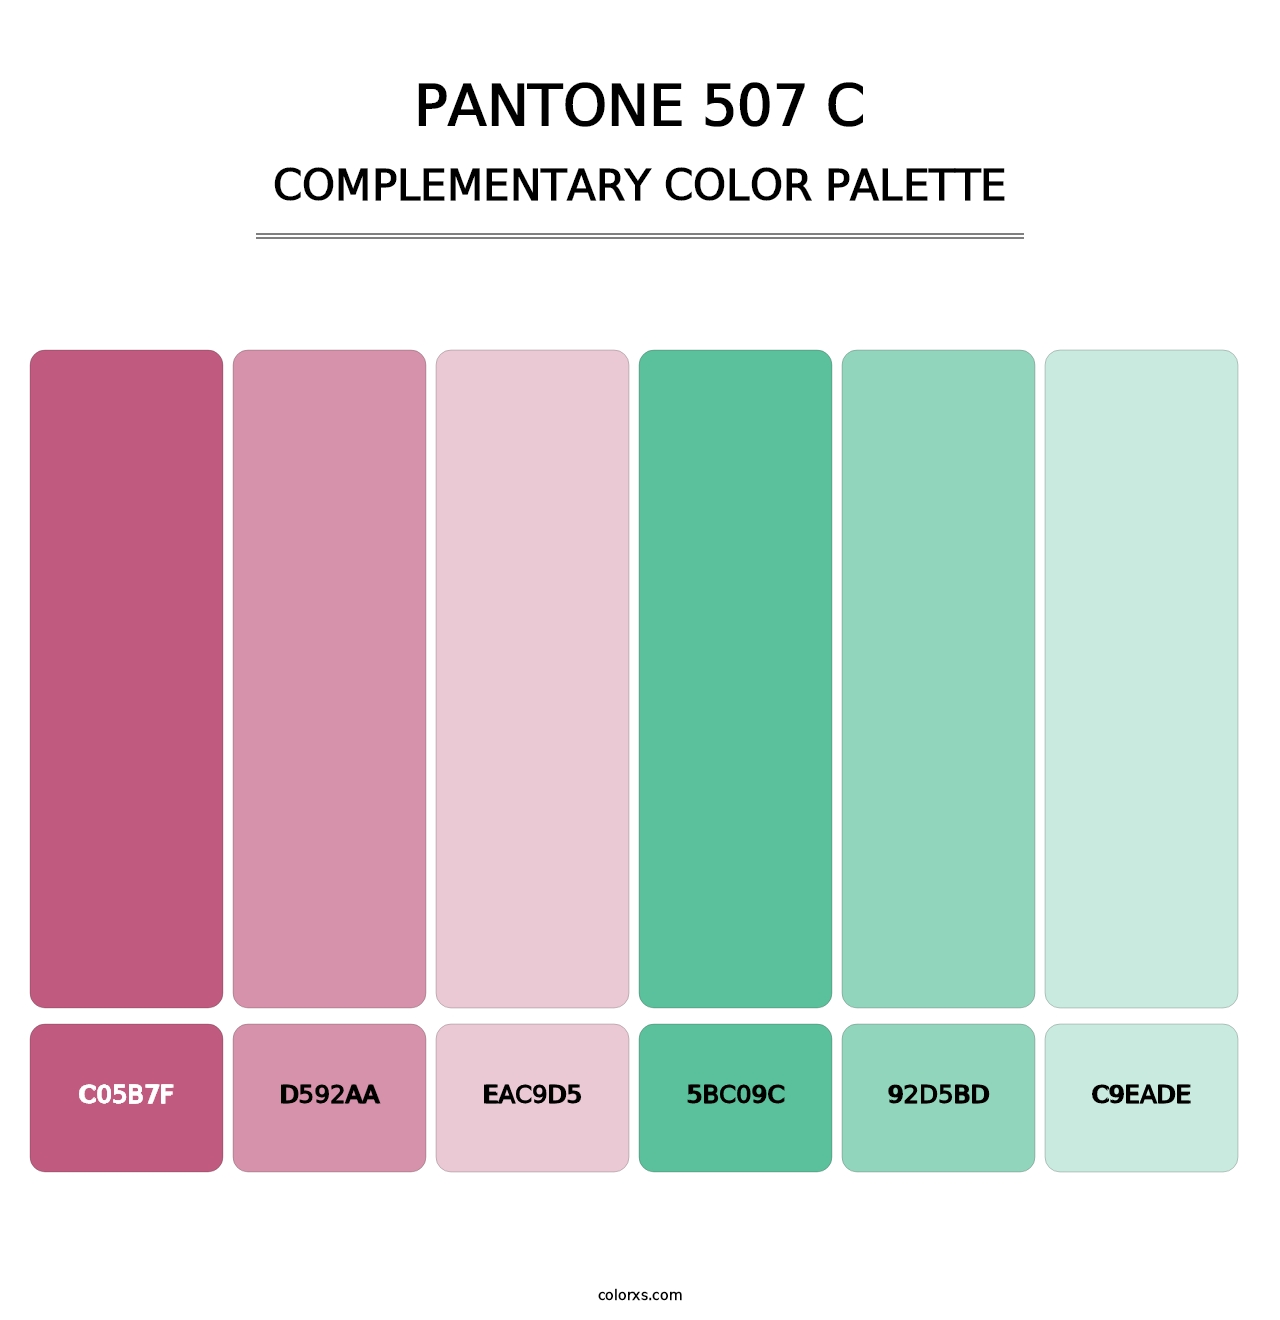 PANTONE 507 C - Complementary Color Palette